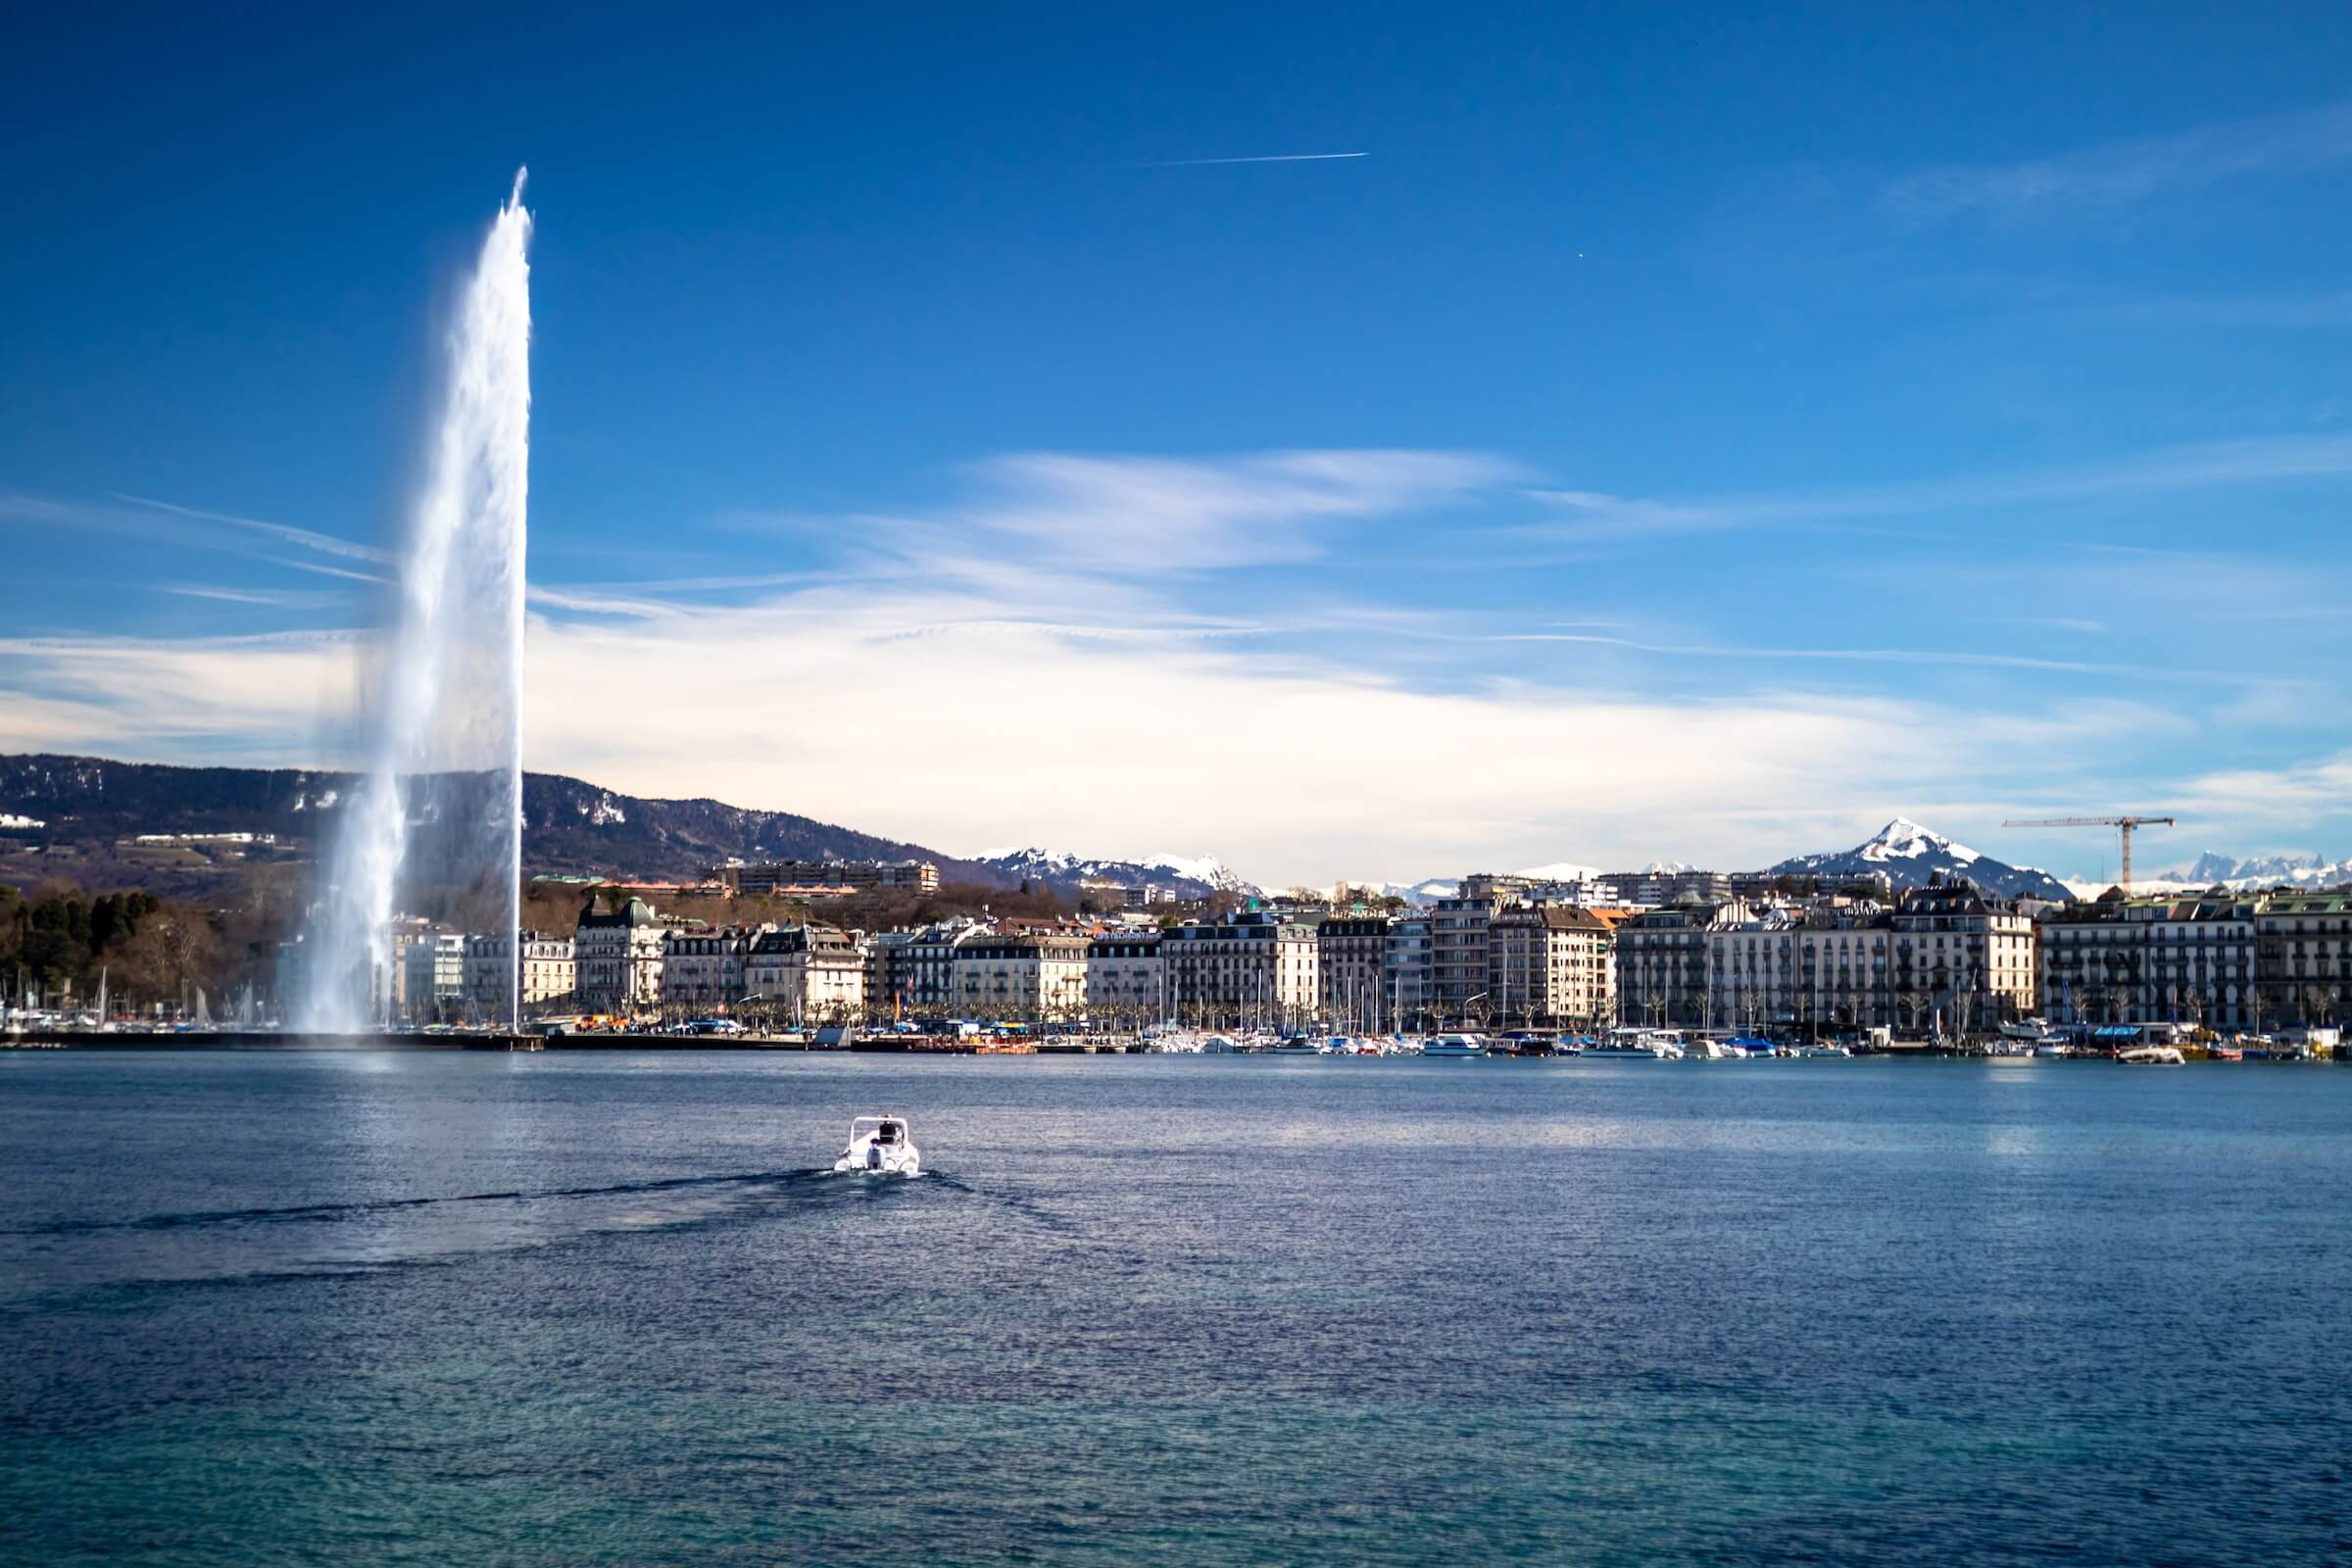 1 day in Geneva, Jet d'Eau, Water Jet, Geneva Fountain is the most iconic landmark in Geneva